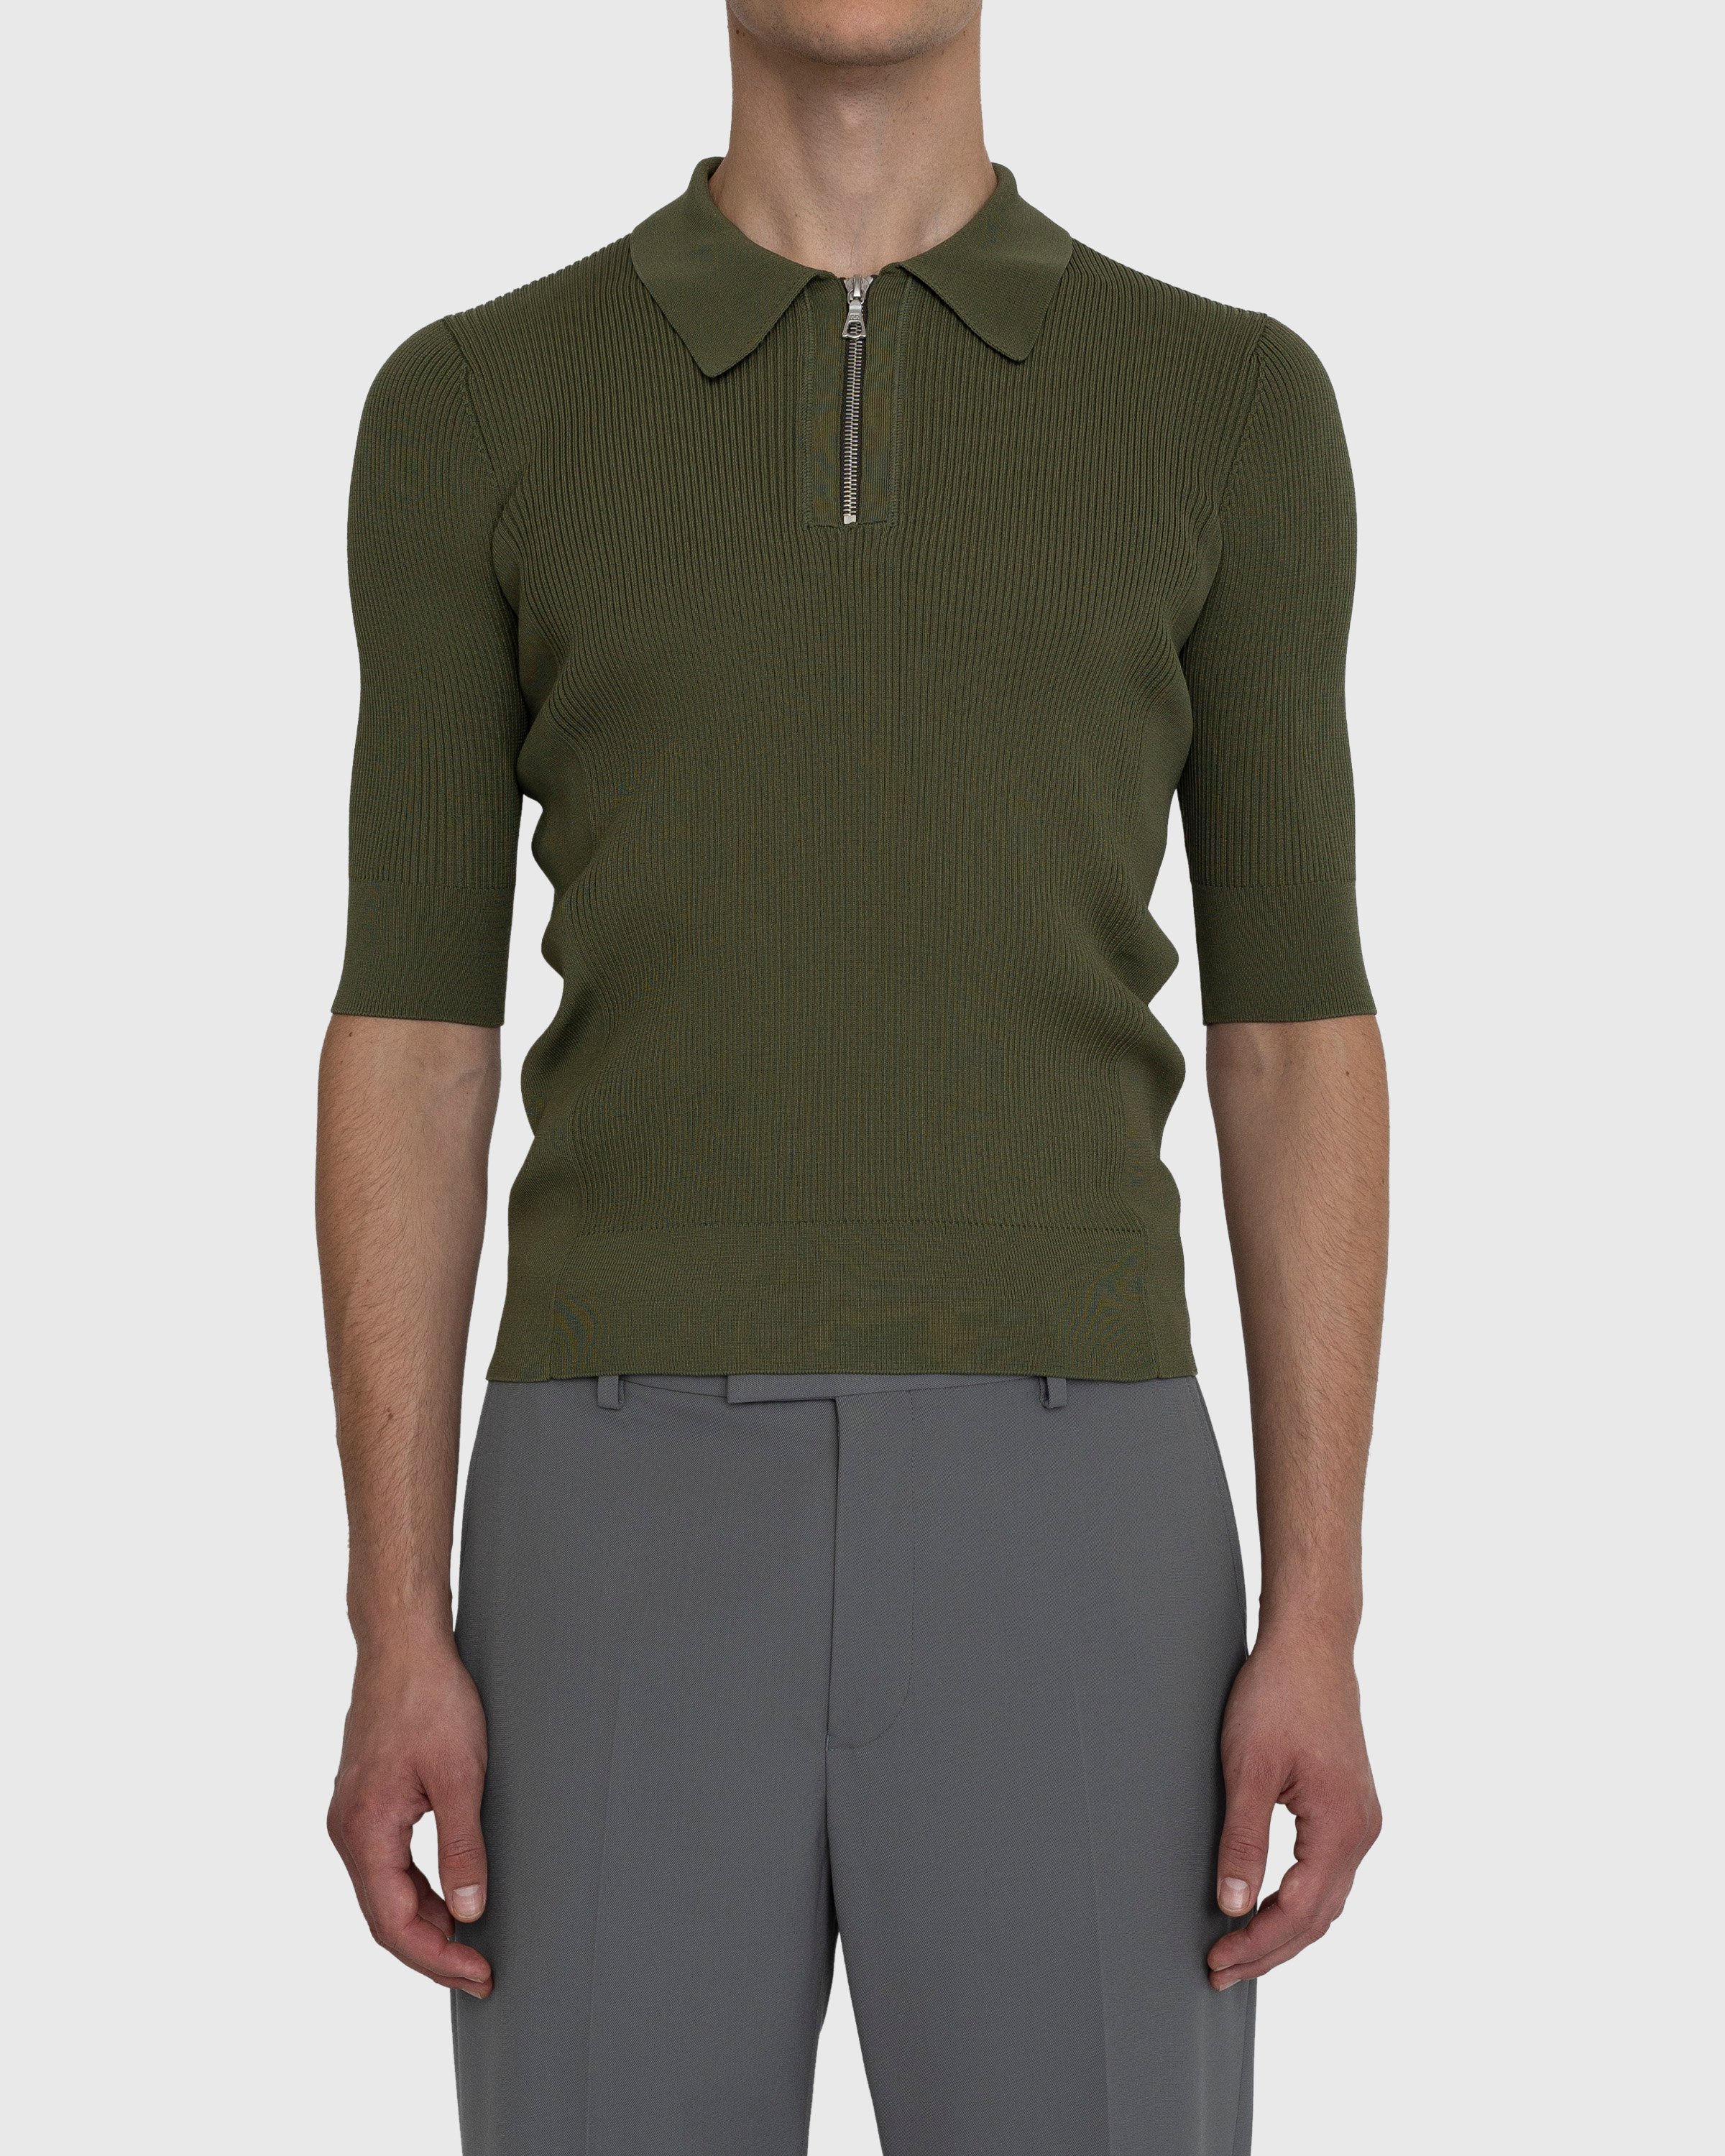 Dries van Noten - Neil Sweater - Clothing - Green - Image 2